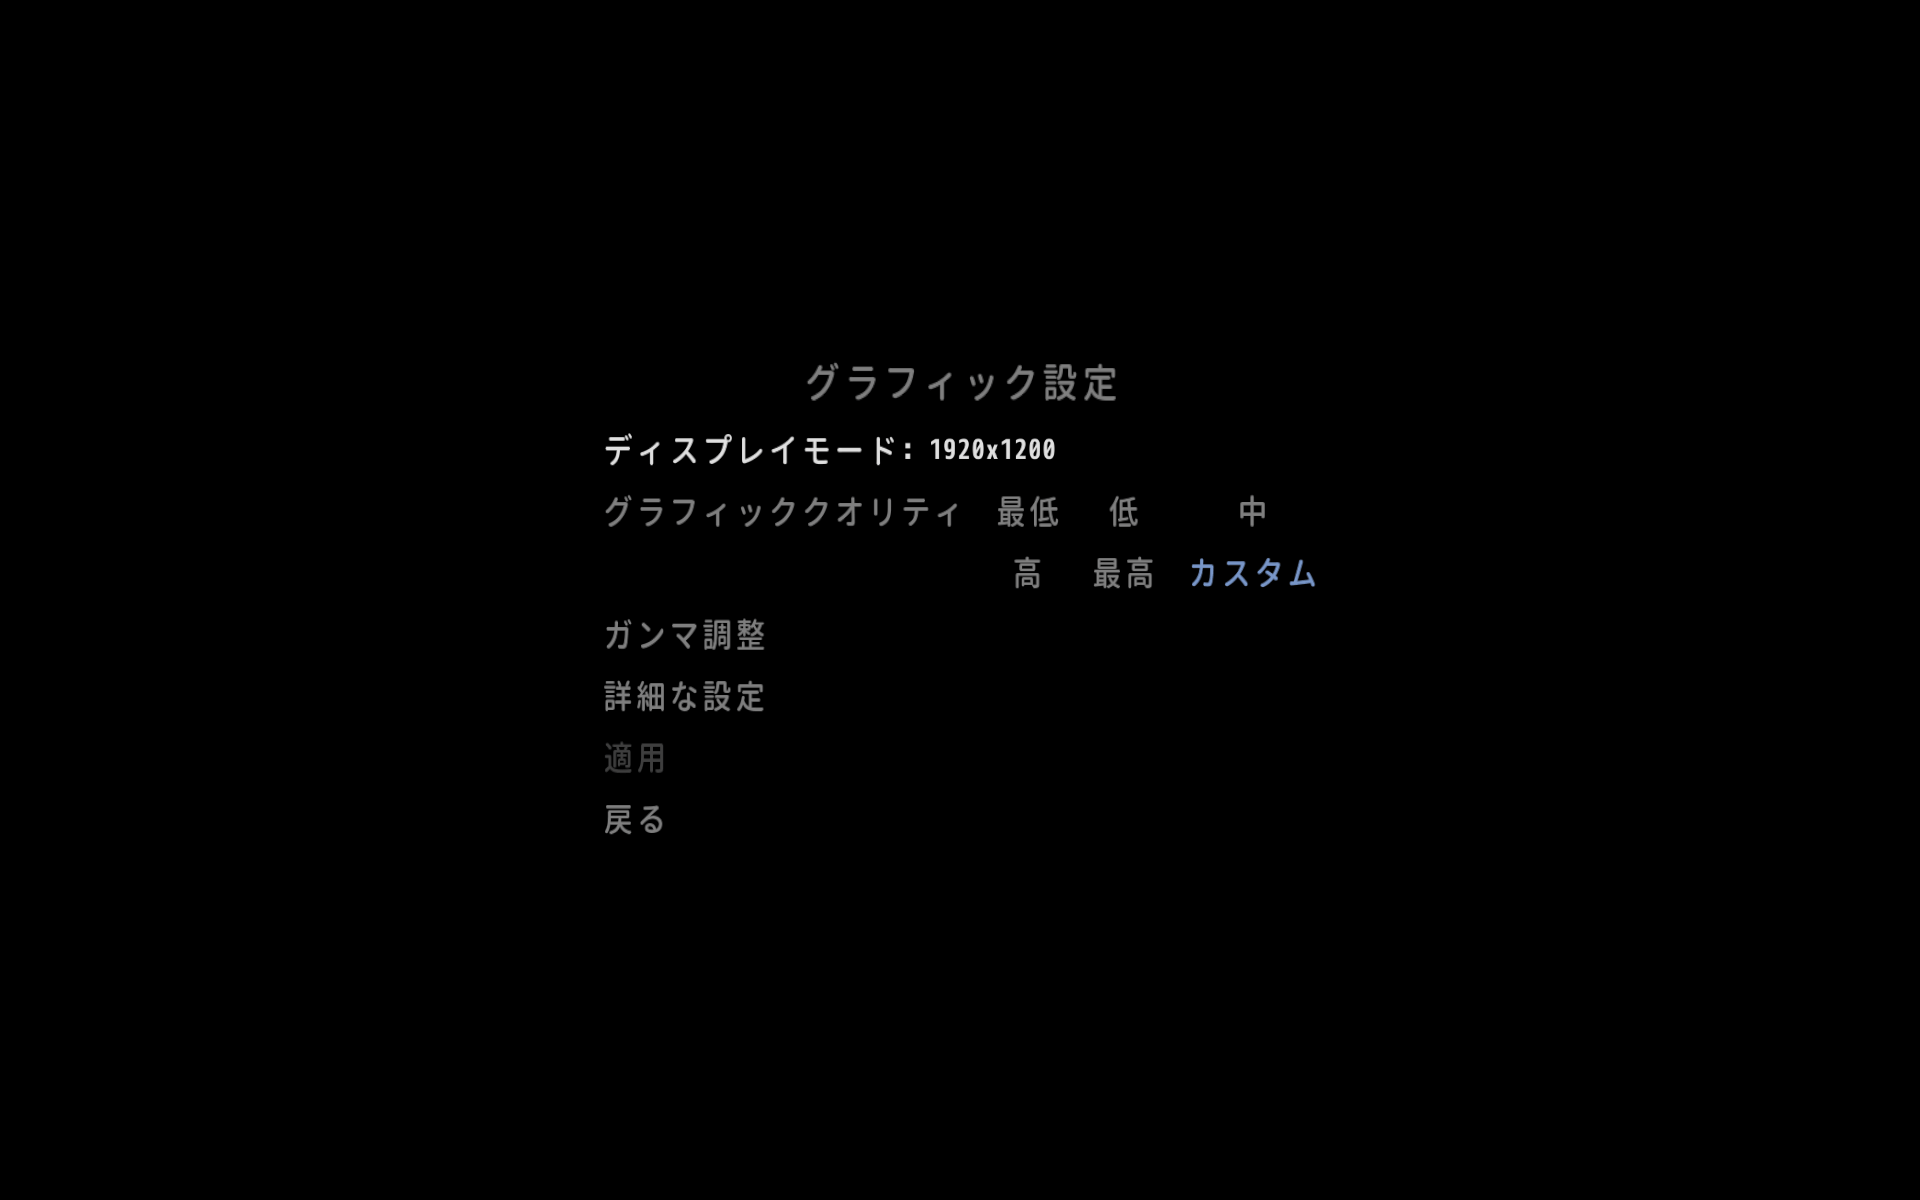 PC ゲーム Papo & Yo 日本語化メモ、日本語化後のスクリーンショット